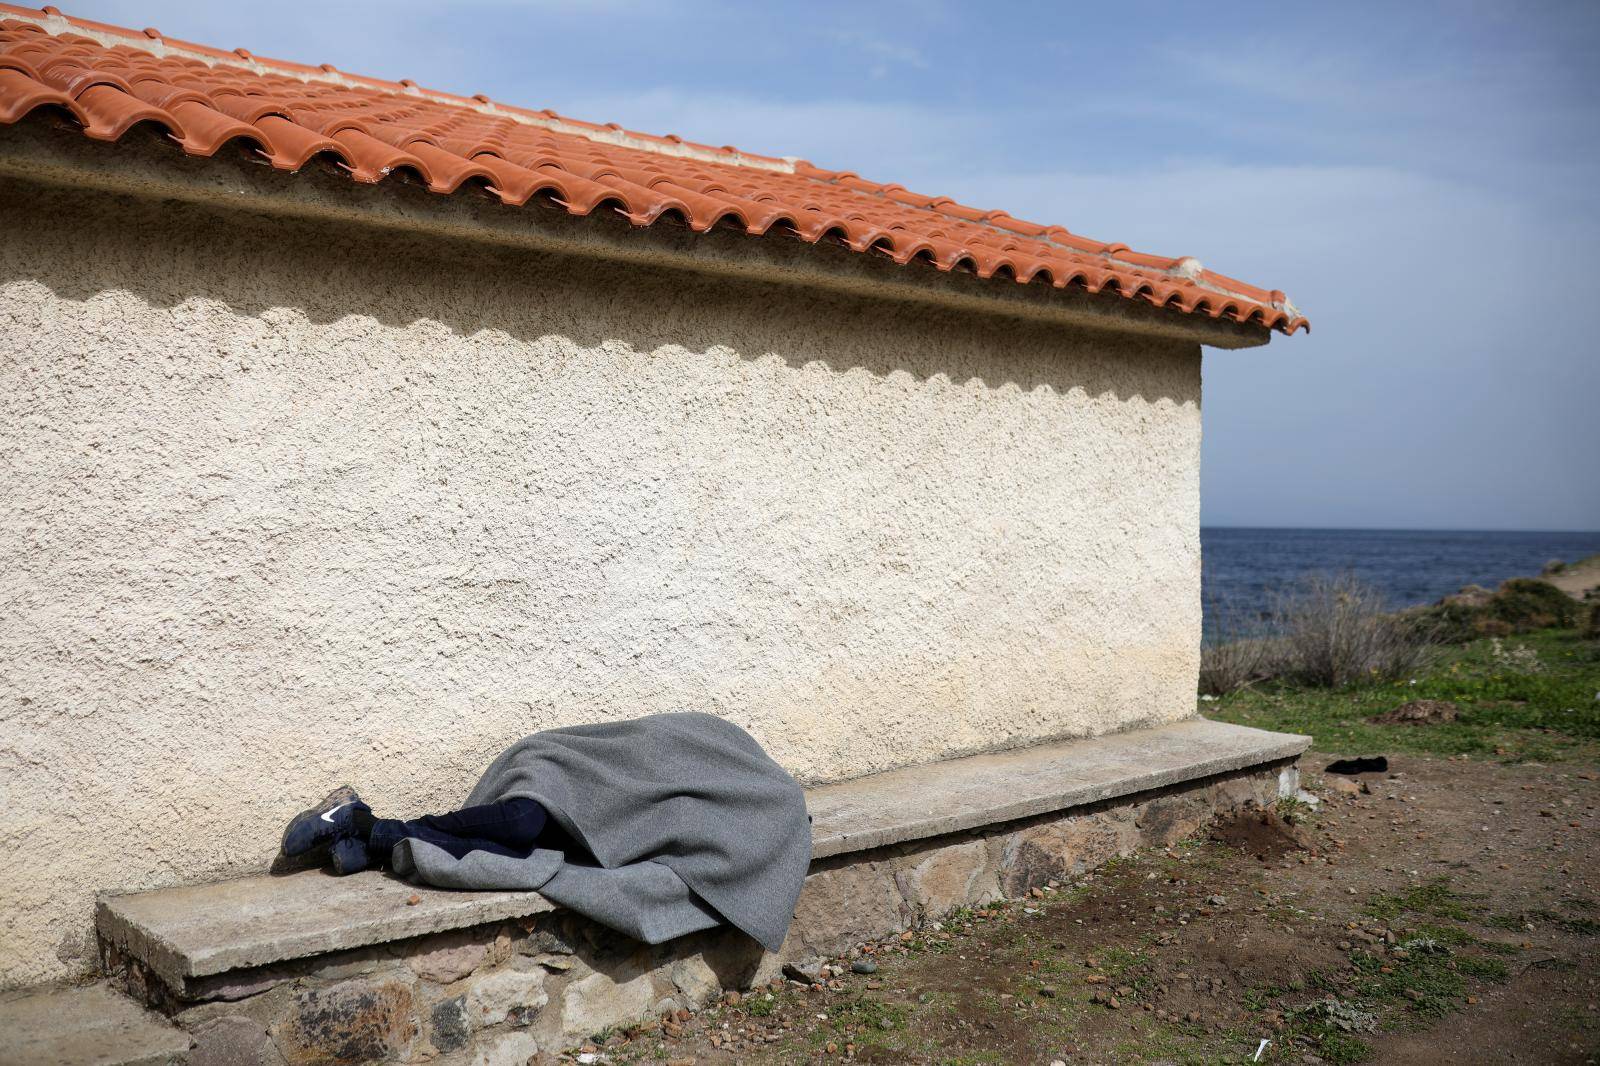 Grčko selo dobrih ljudi: 'Svi mi želimo pomagati izbjeglicama'